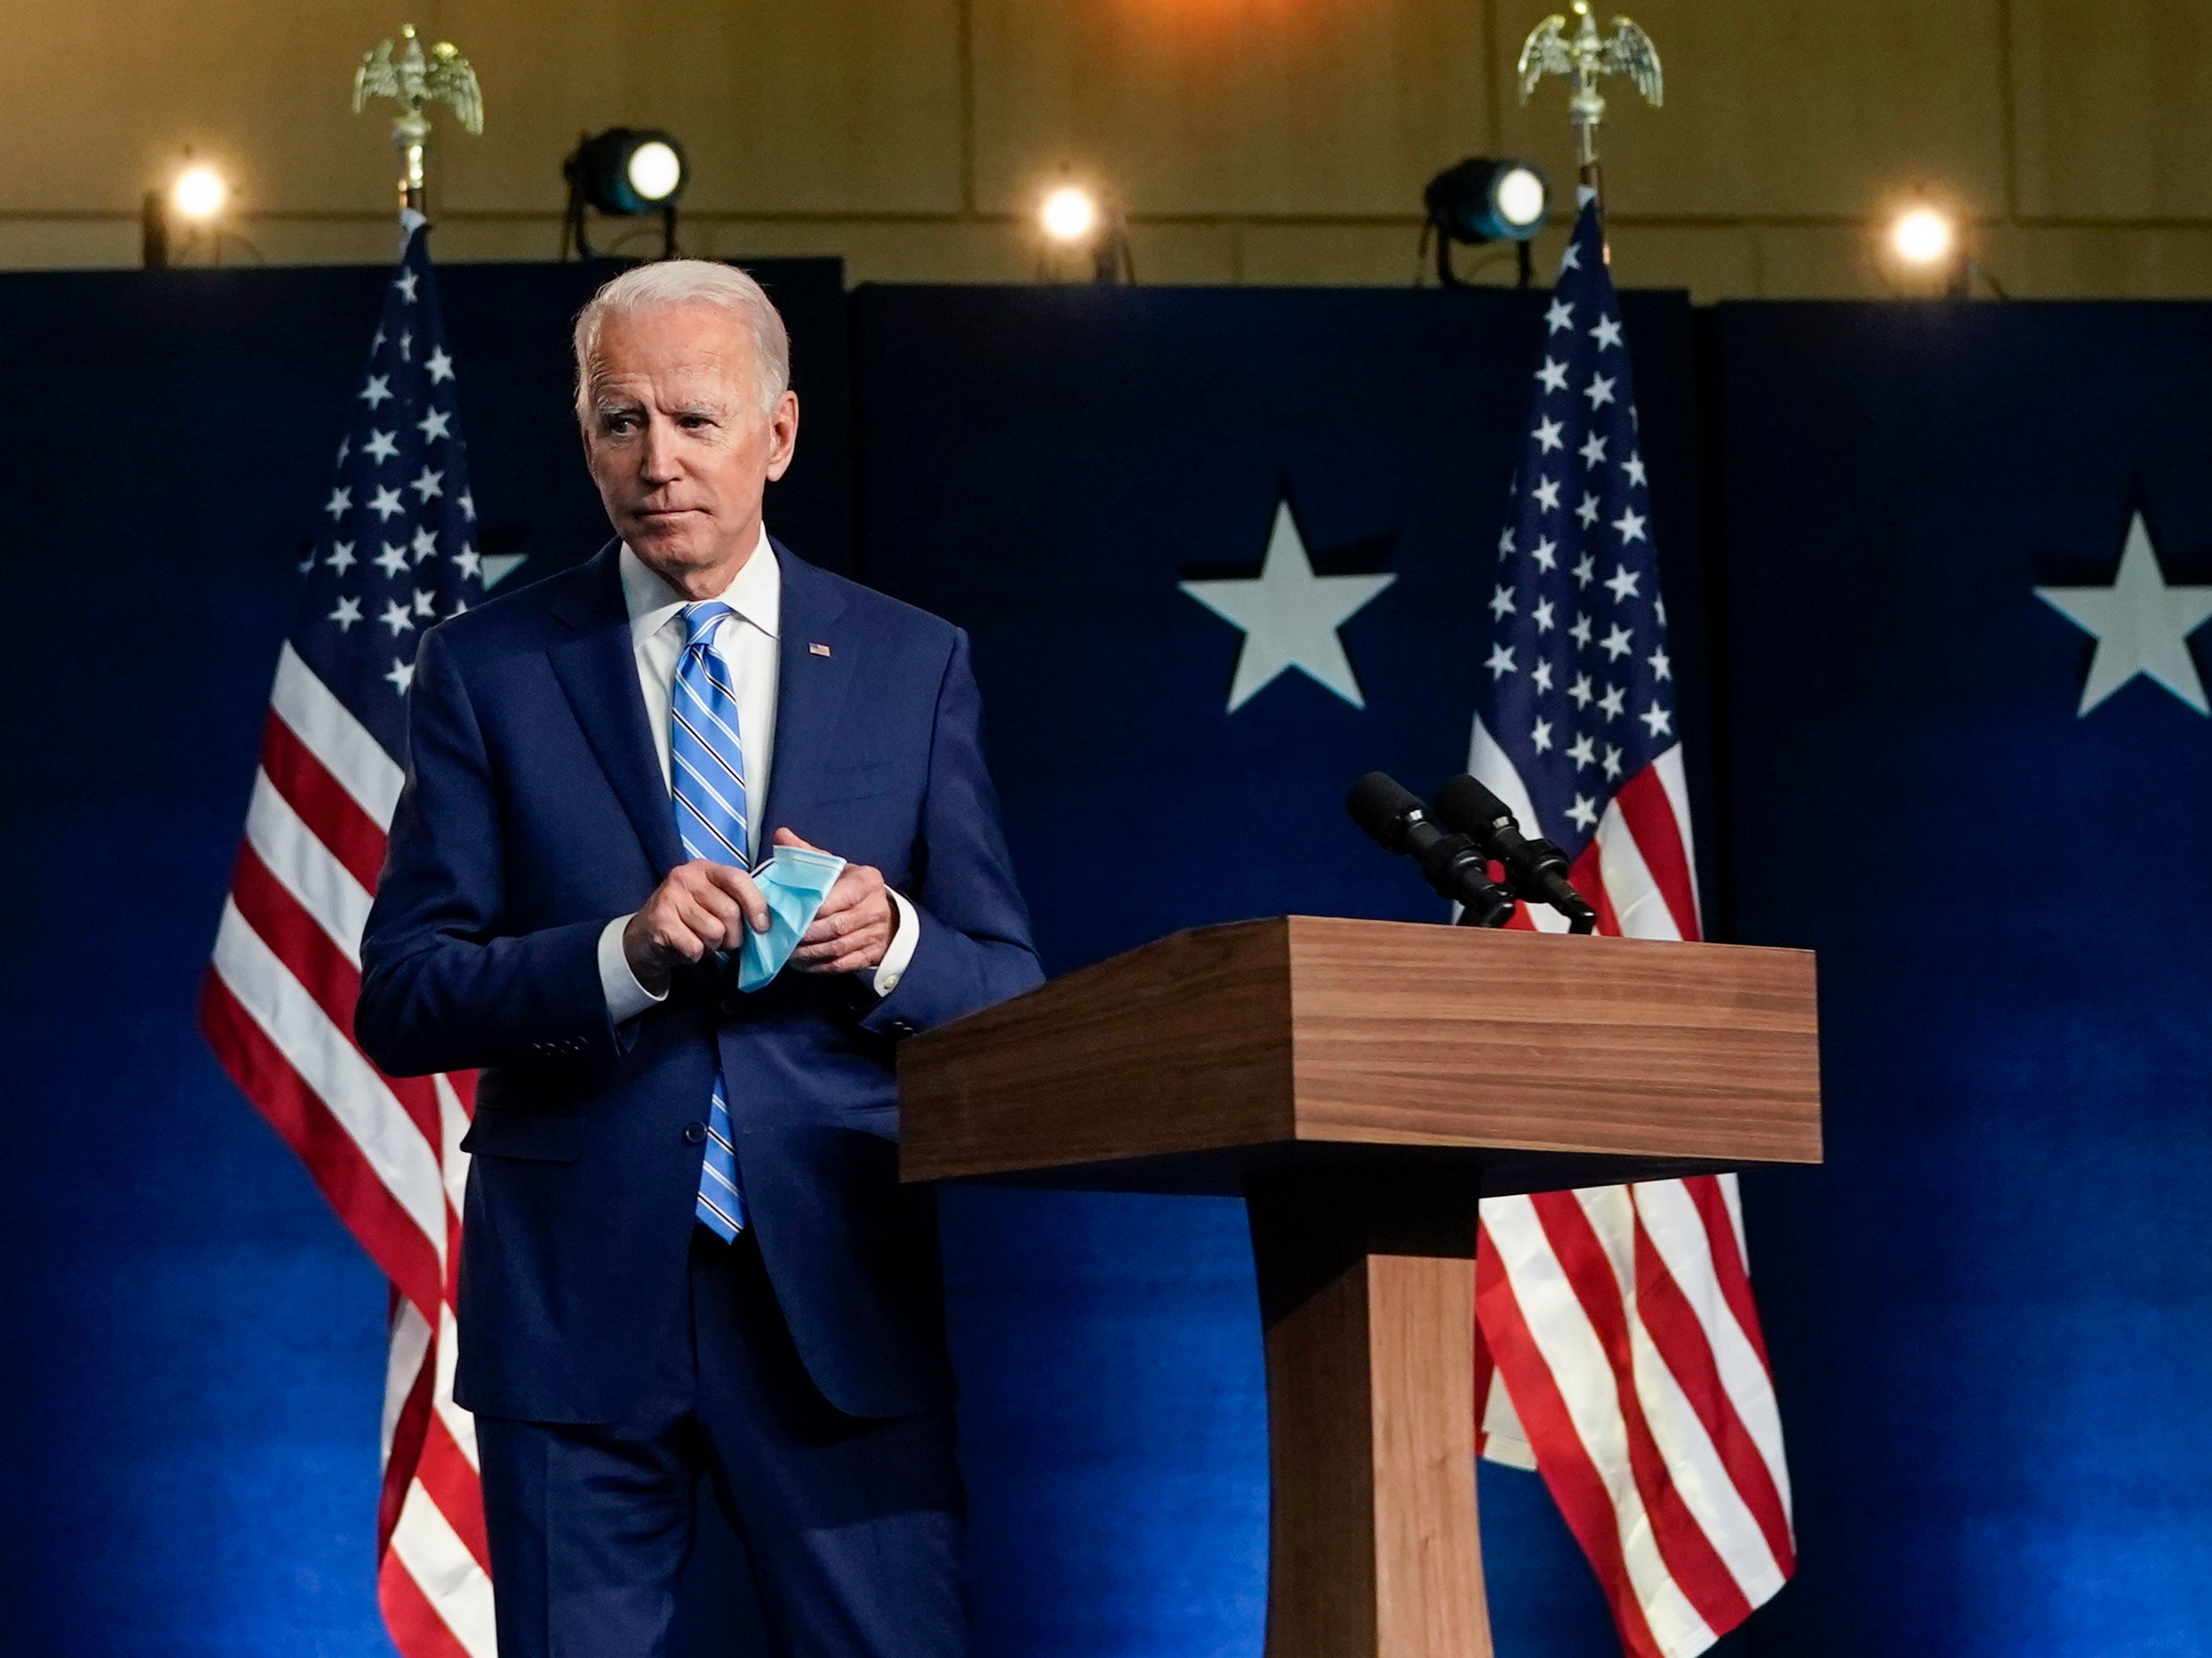 Joe Biden leaves the lectern after speaking on 4 November 2020 in Wilmington, Delaware